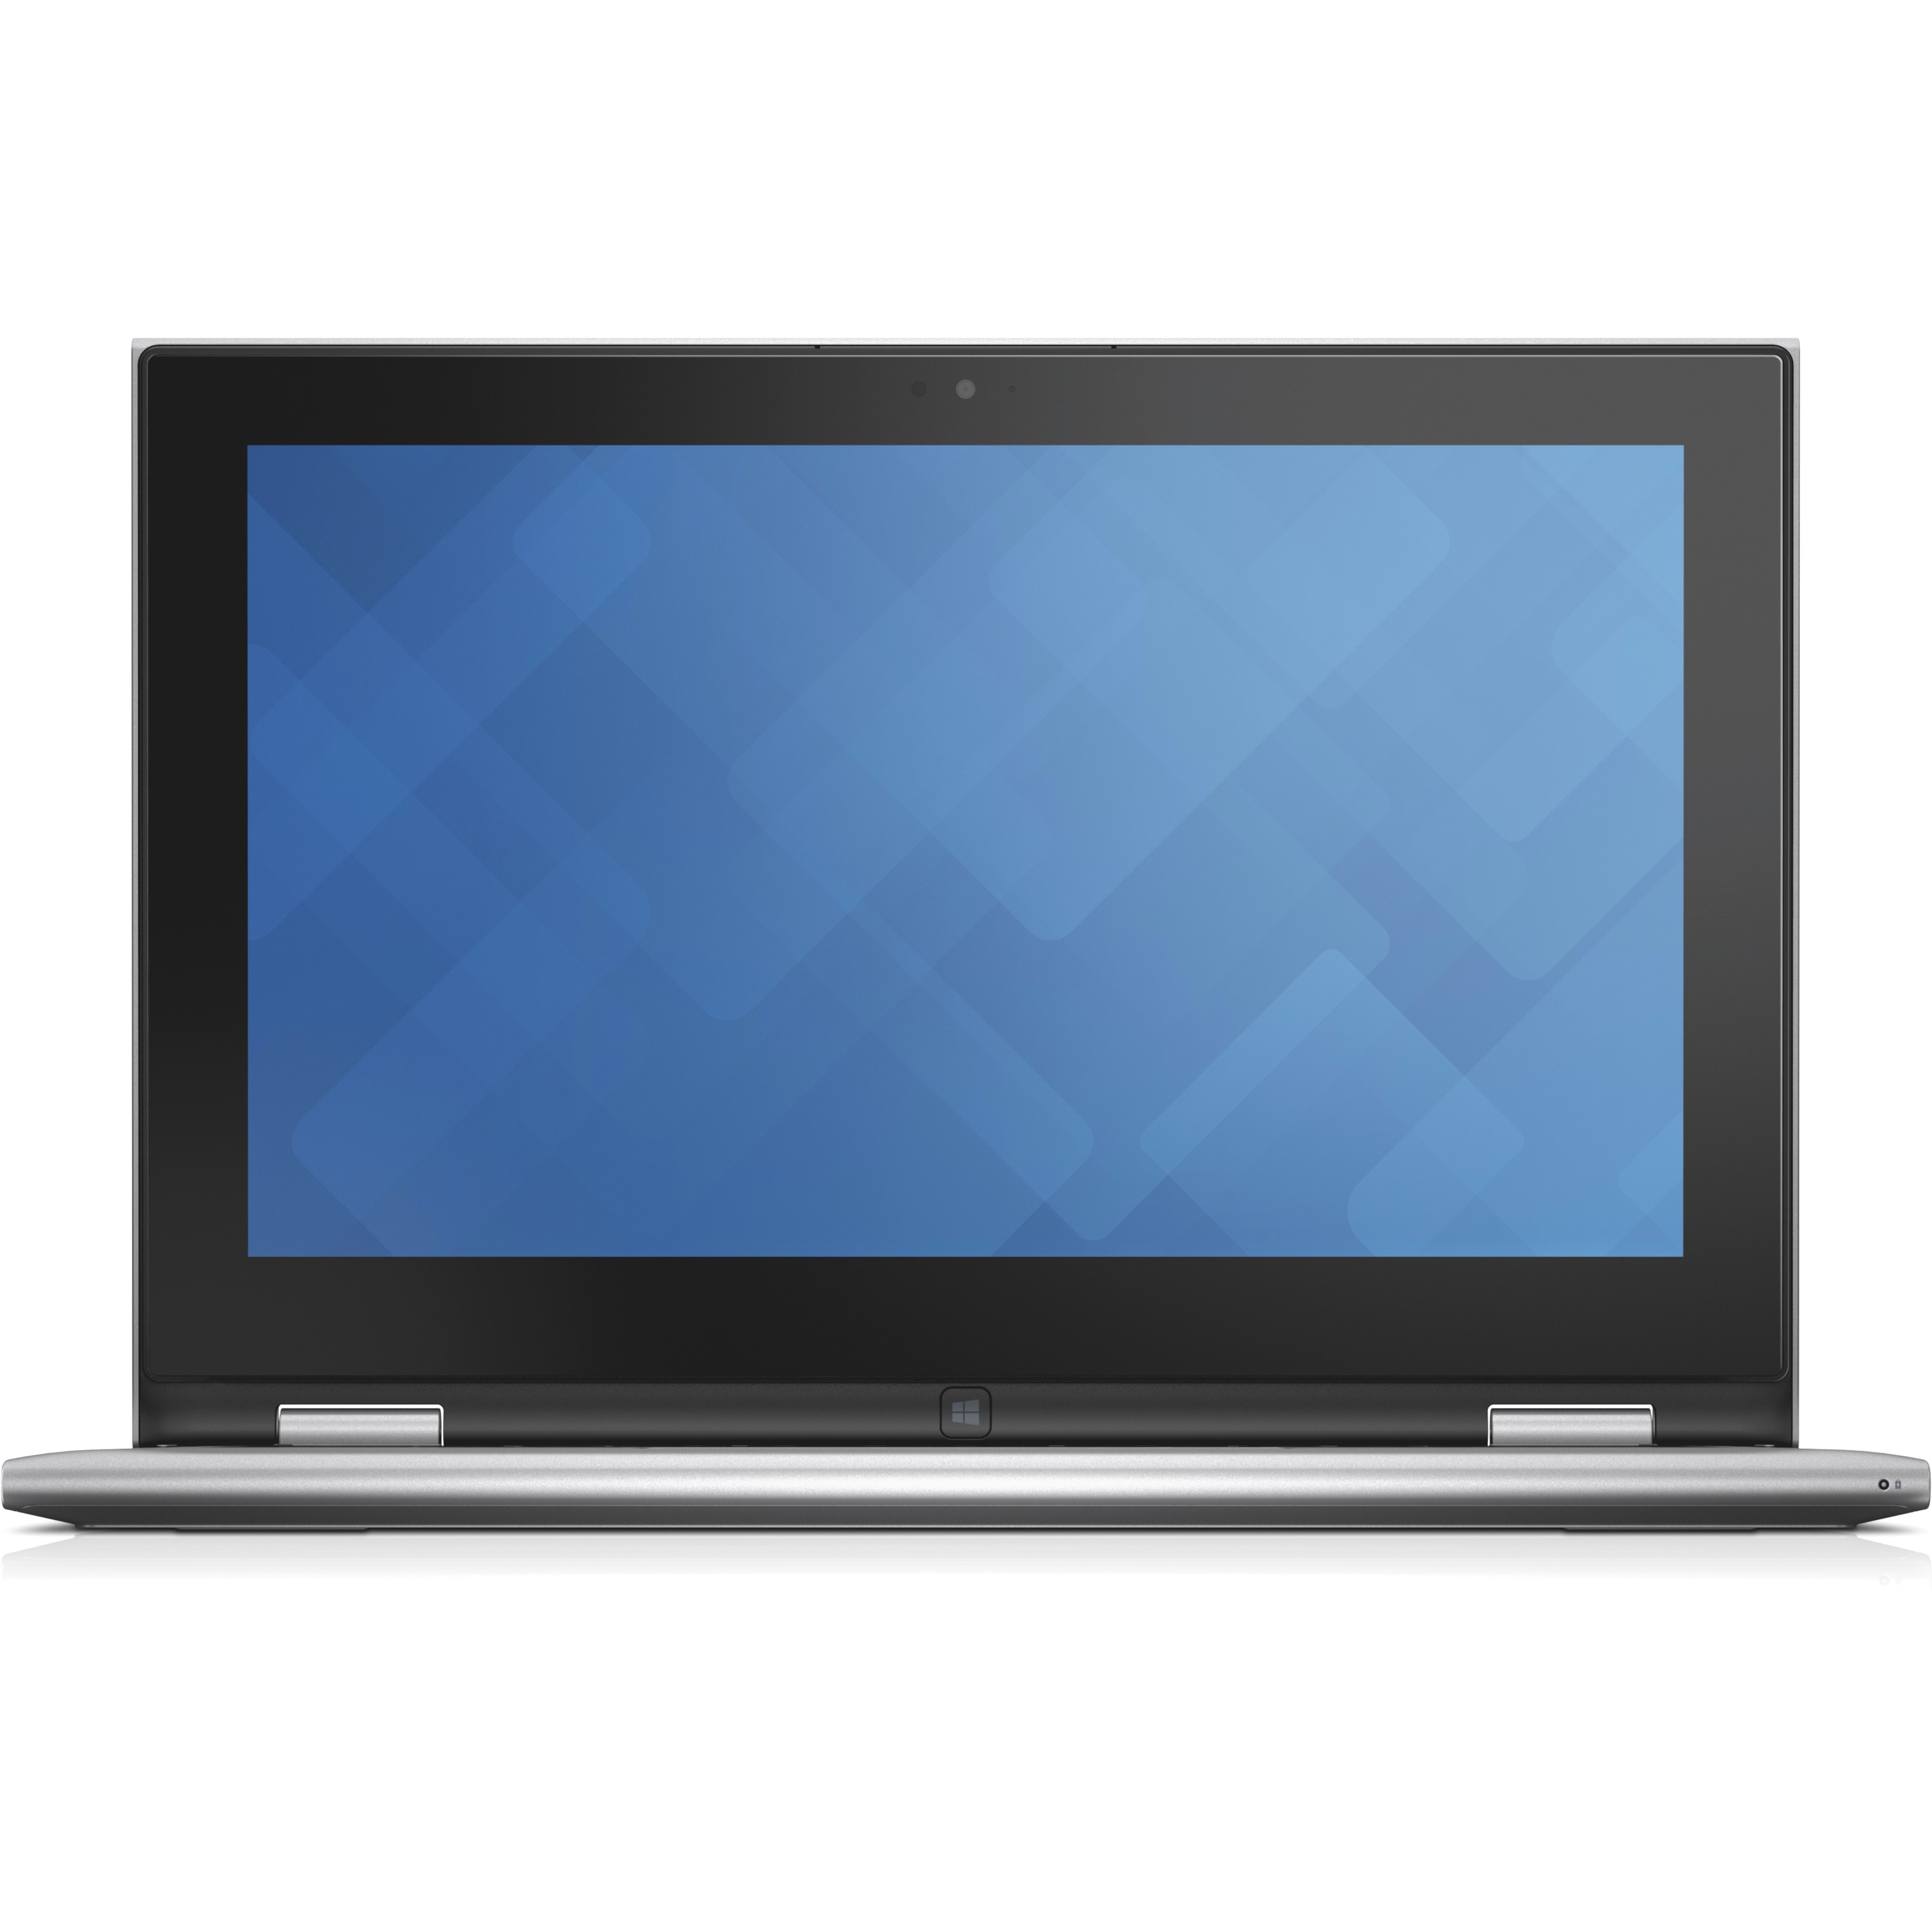 Dell Inspiron 11.6" Touchscreen 2-in-1 Laptop, Intel Pentium N3530, 500GB HD, Windows 8.1, i3147-3750sLV - image 1 of 6